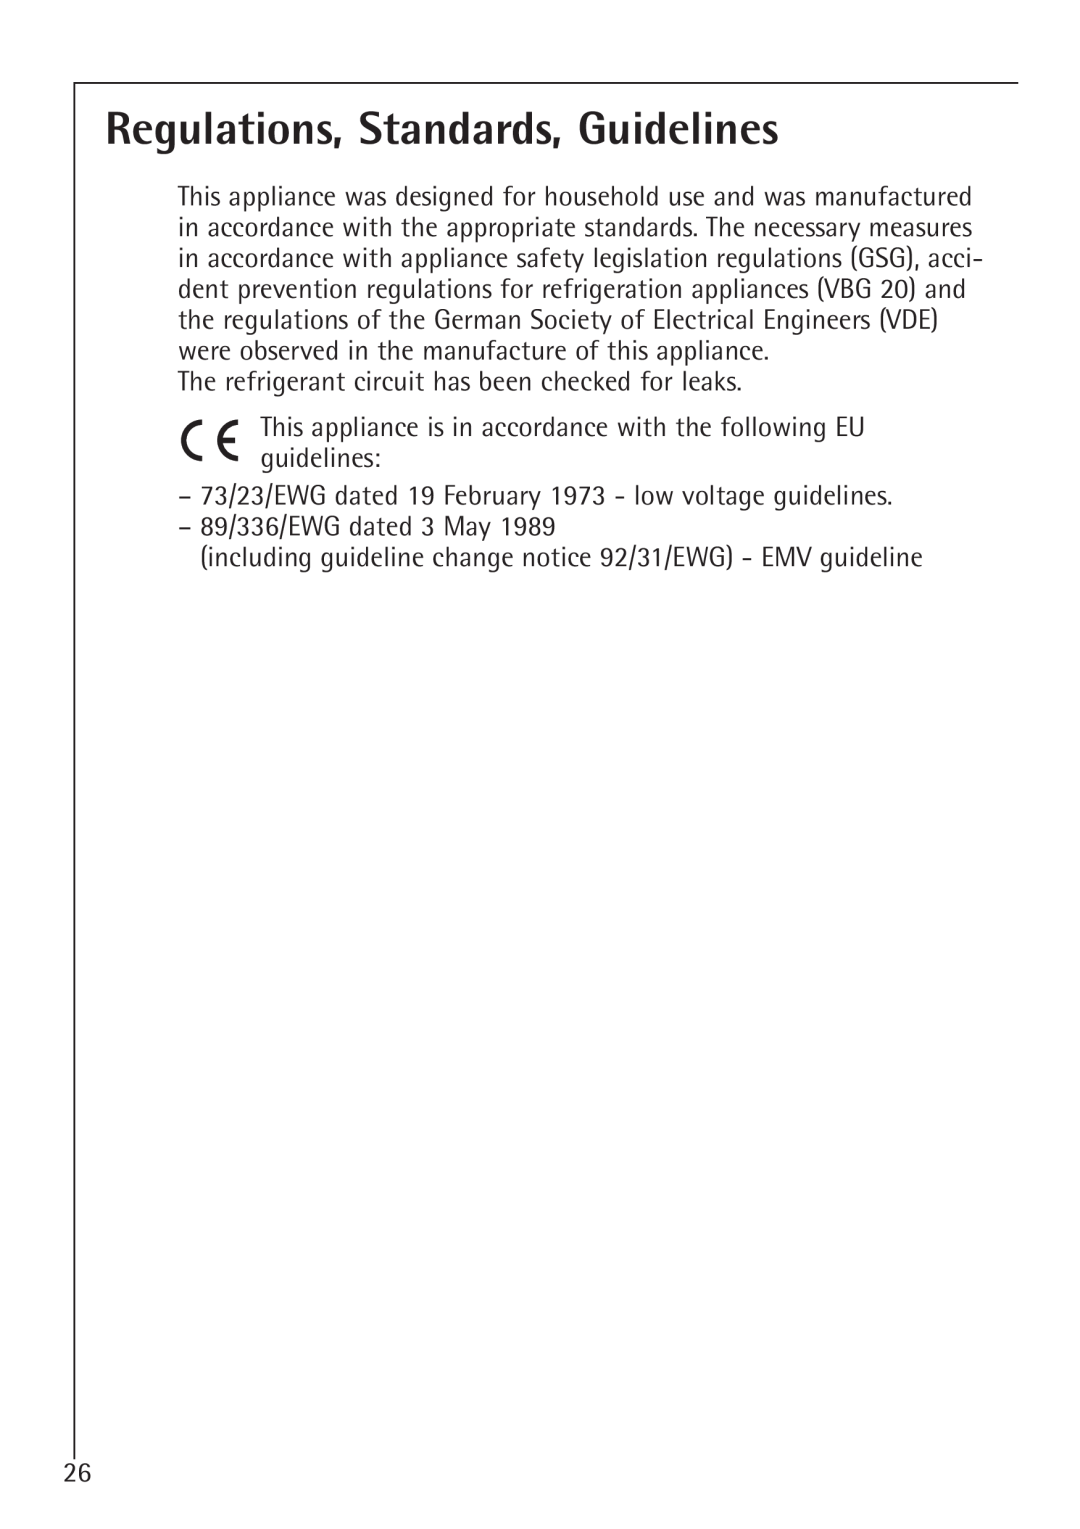 Electrolux 86000 i installation instructions Regulations, Standards, Guidelines 